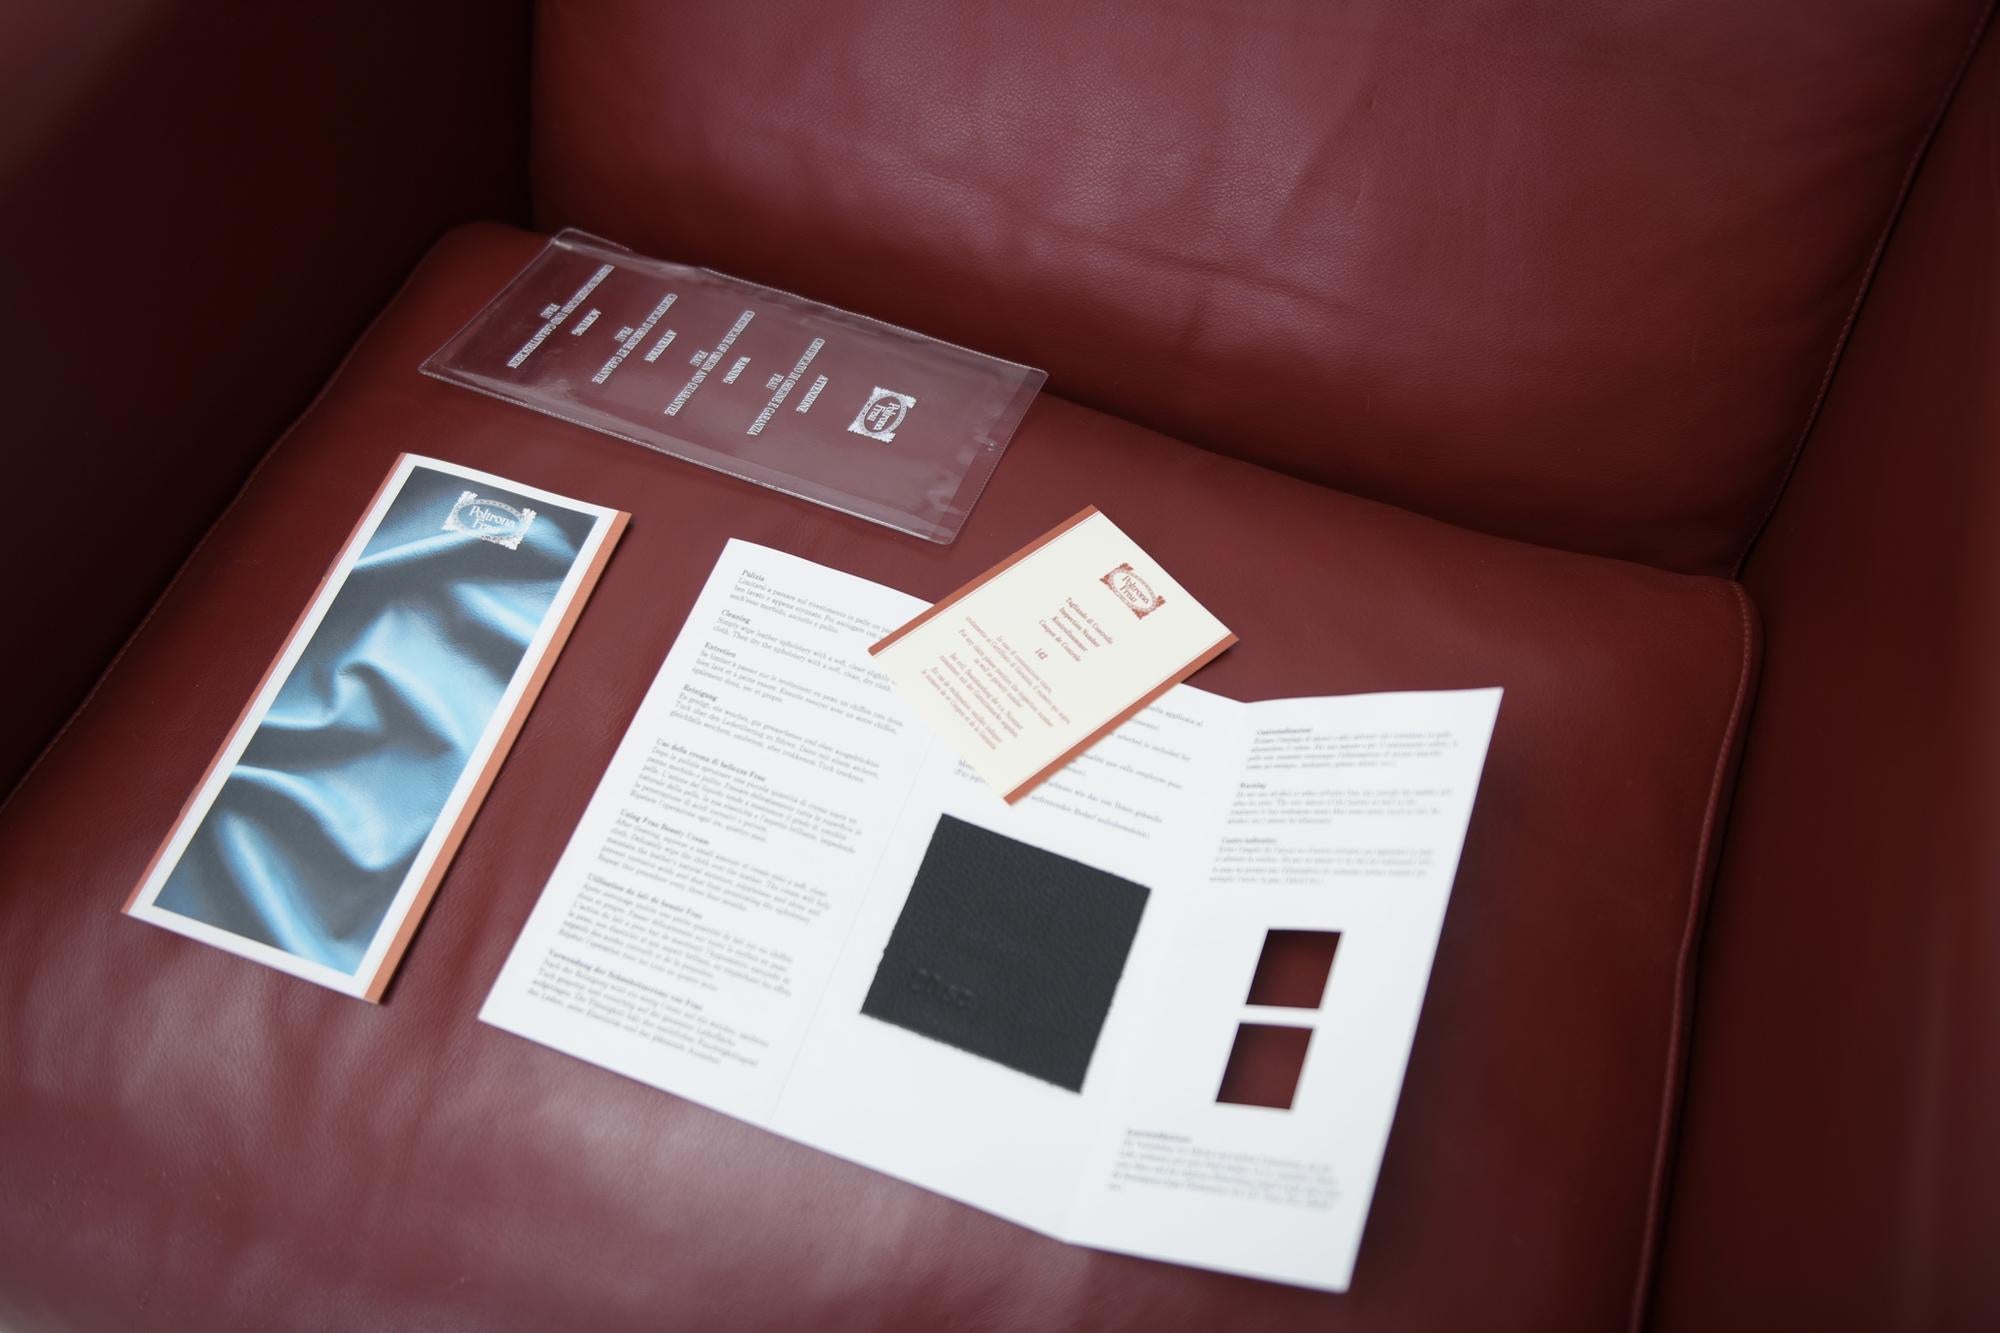 La Capanelle Leather Leasure Chairs by Tito Agnoli for Poltrona Frau 2